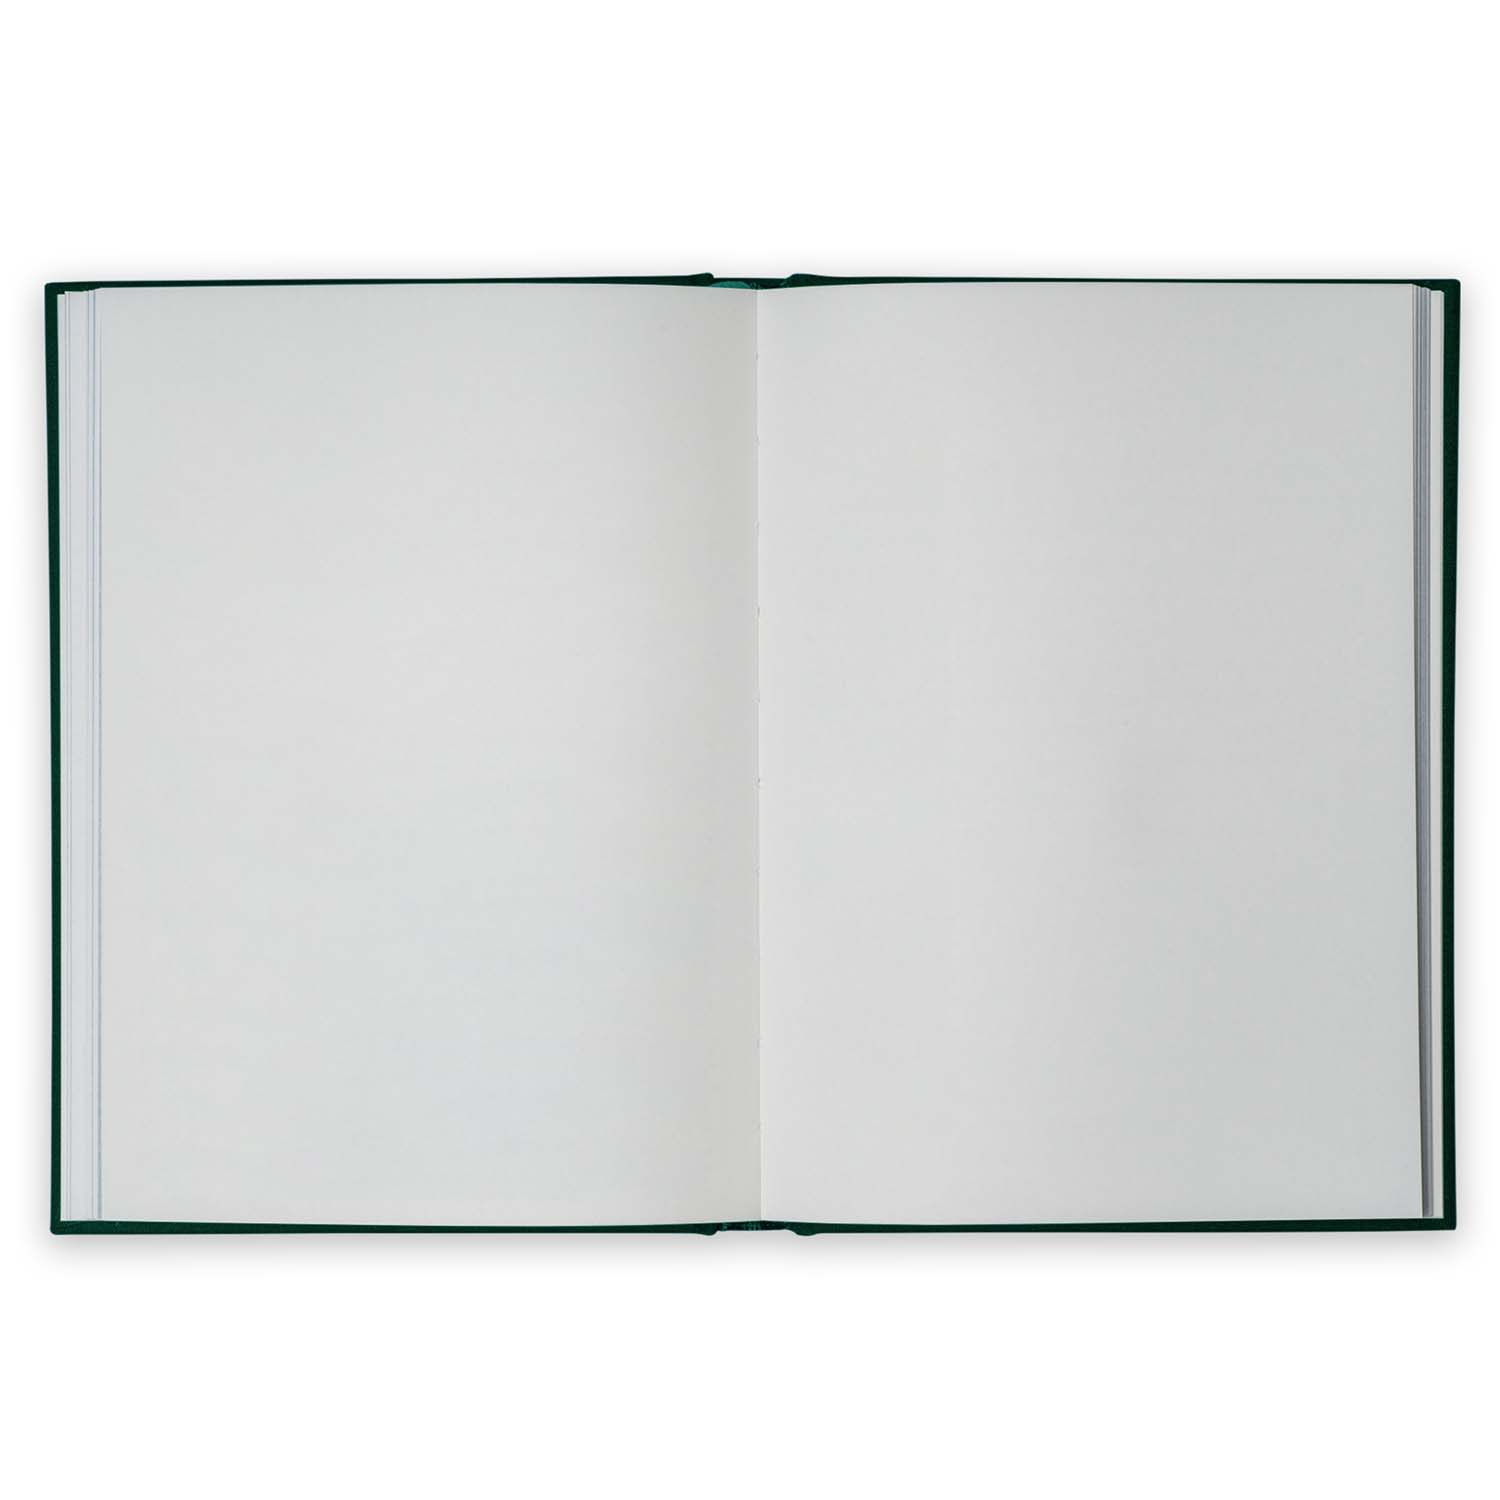 Kartotek Capenhagen - Hardcover Notebook - Notes Bottle Green - HN-0006 - Inside pages